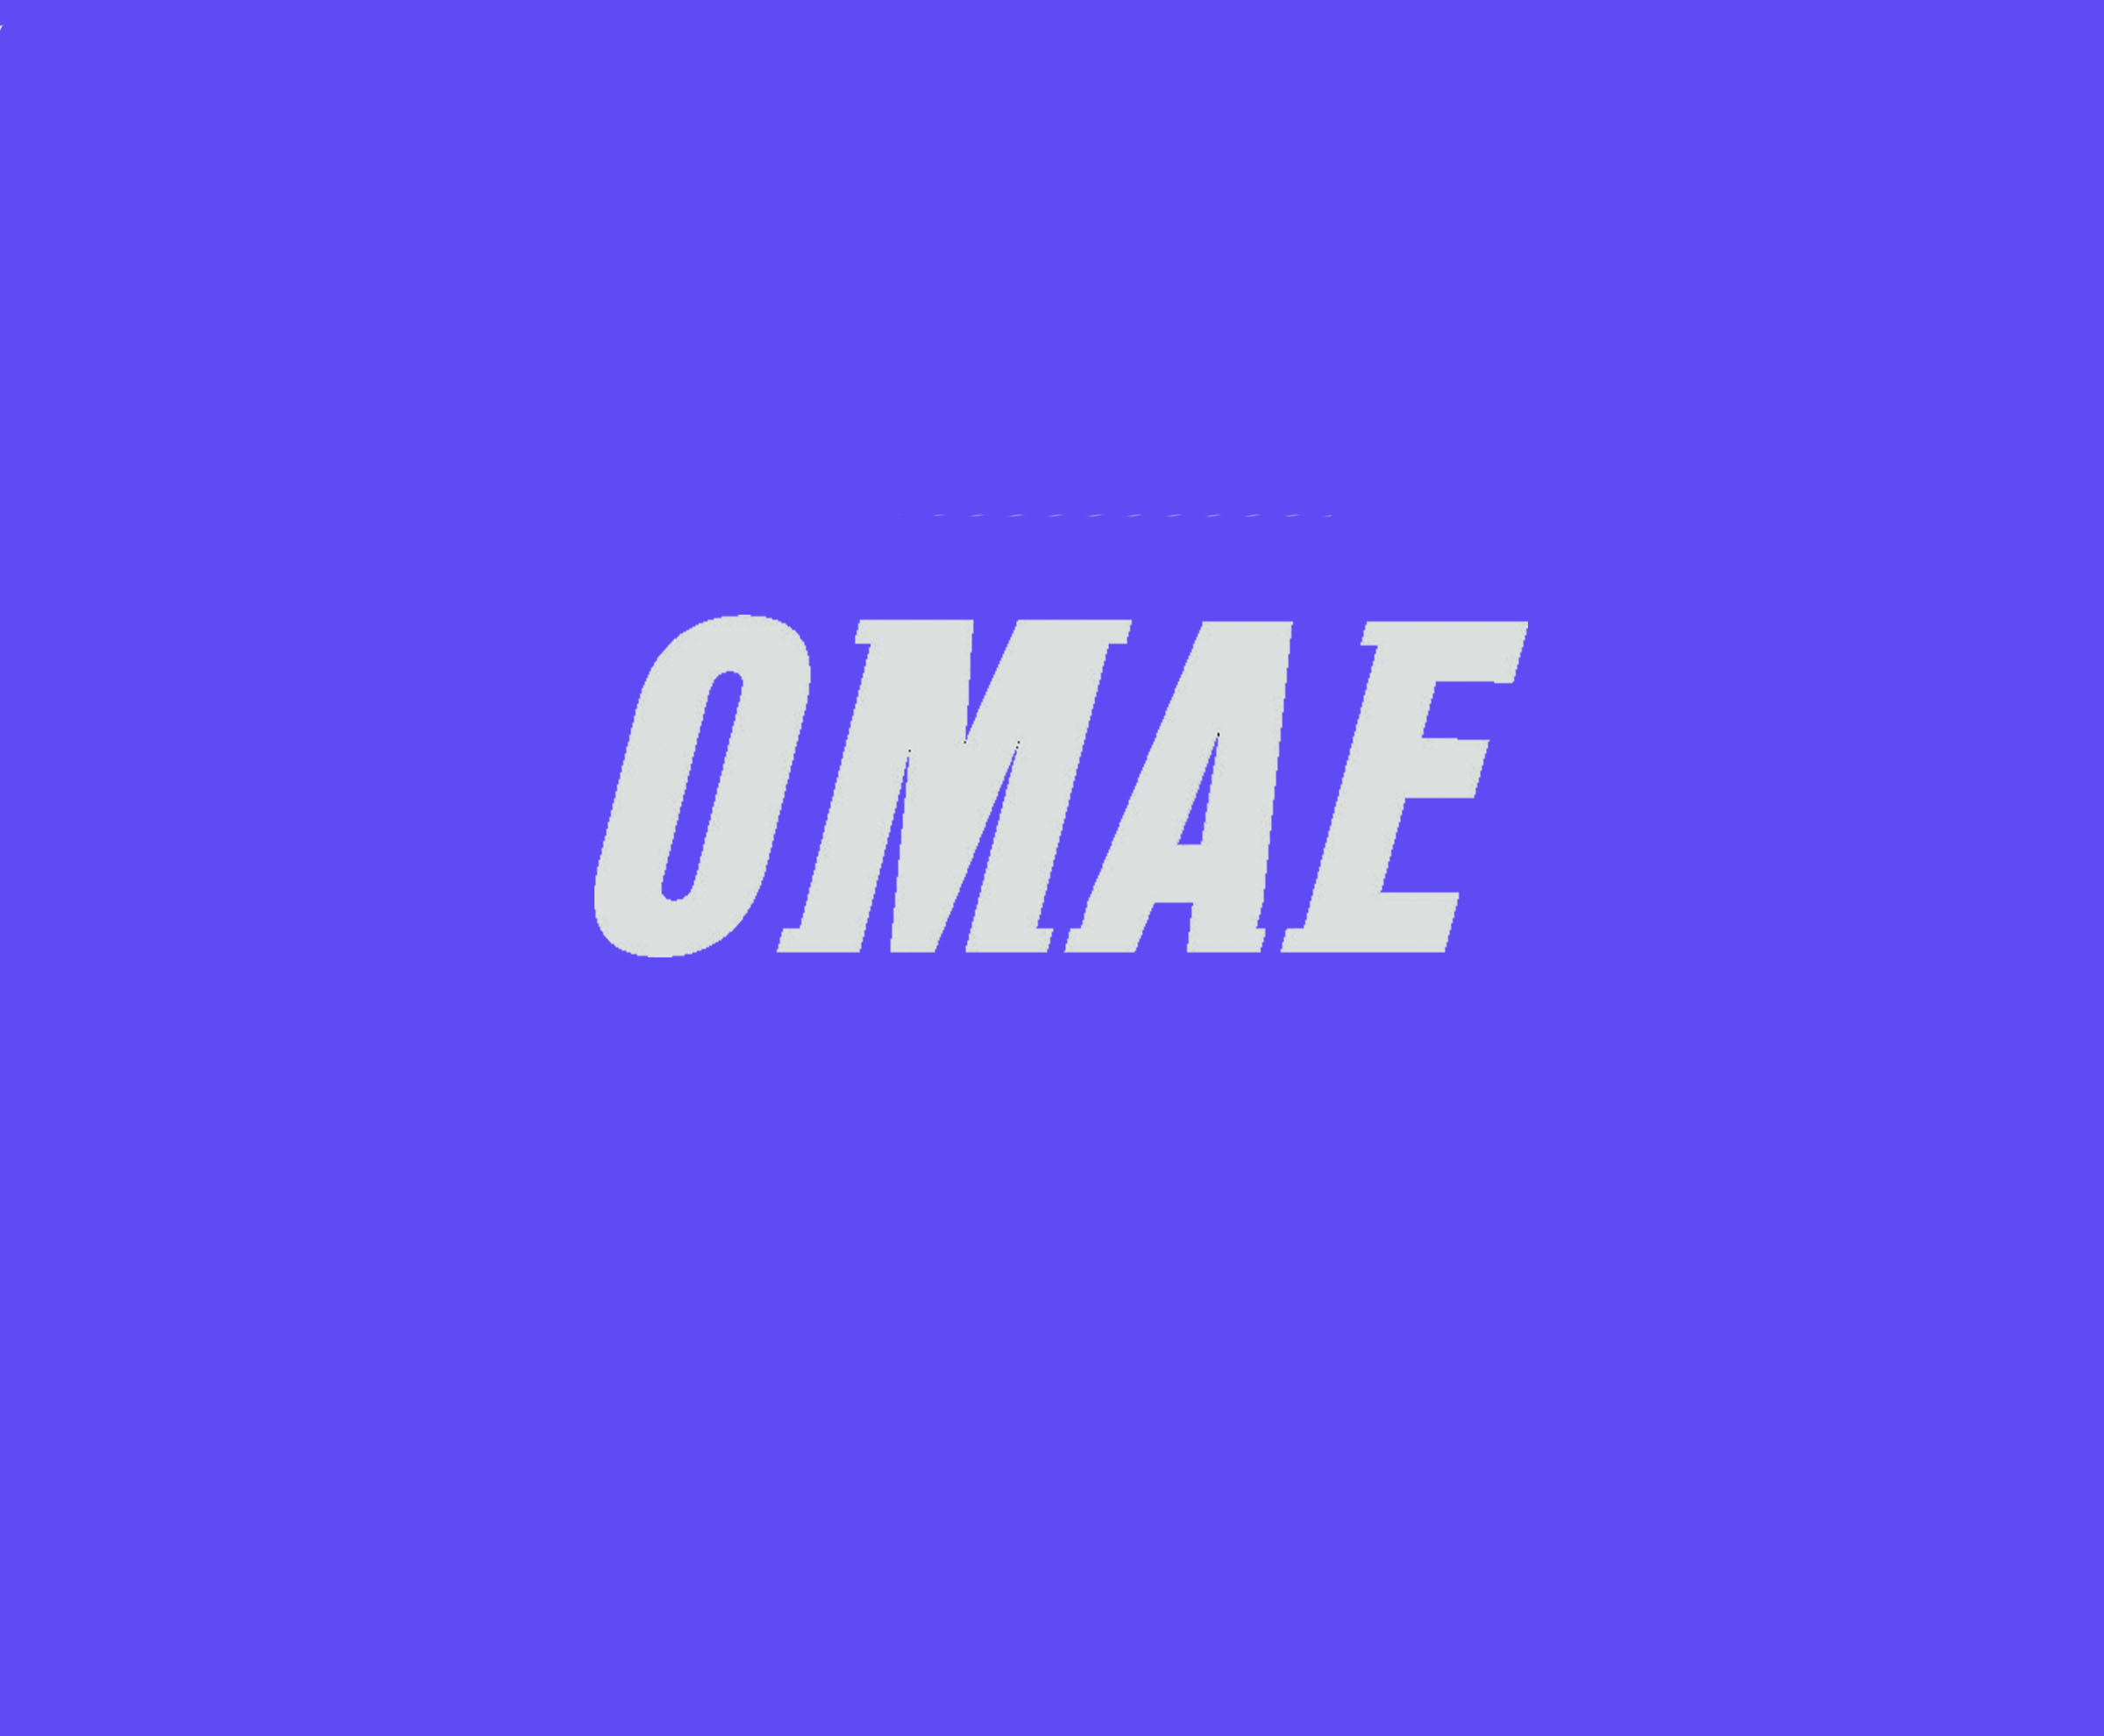 Omae news